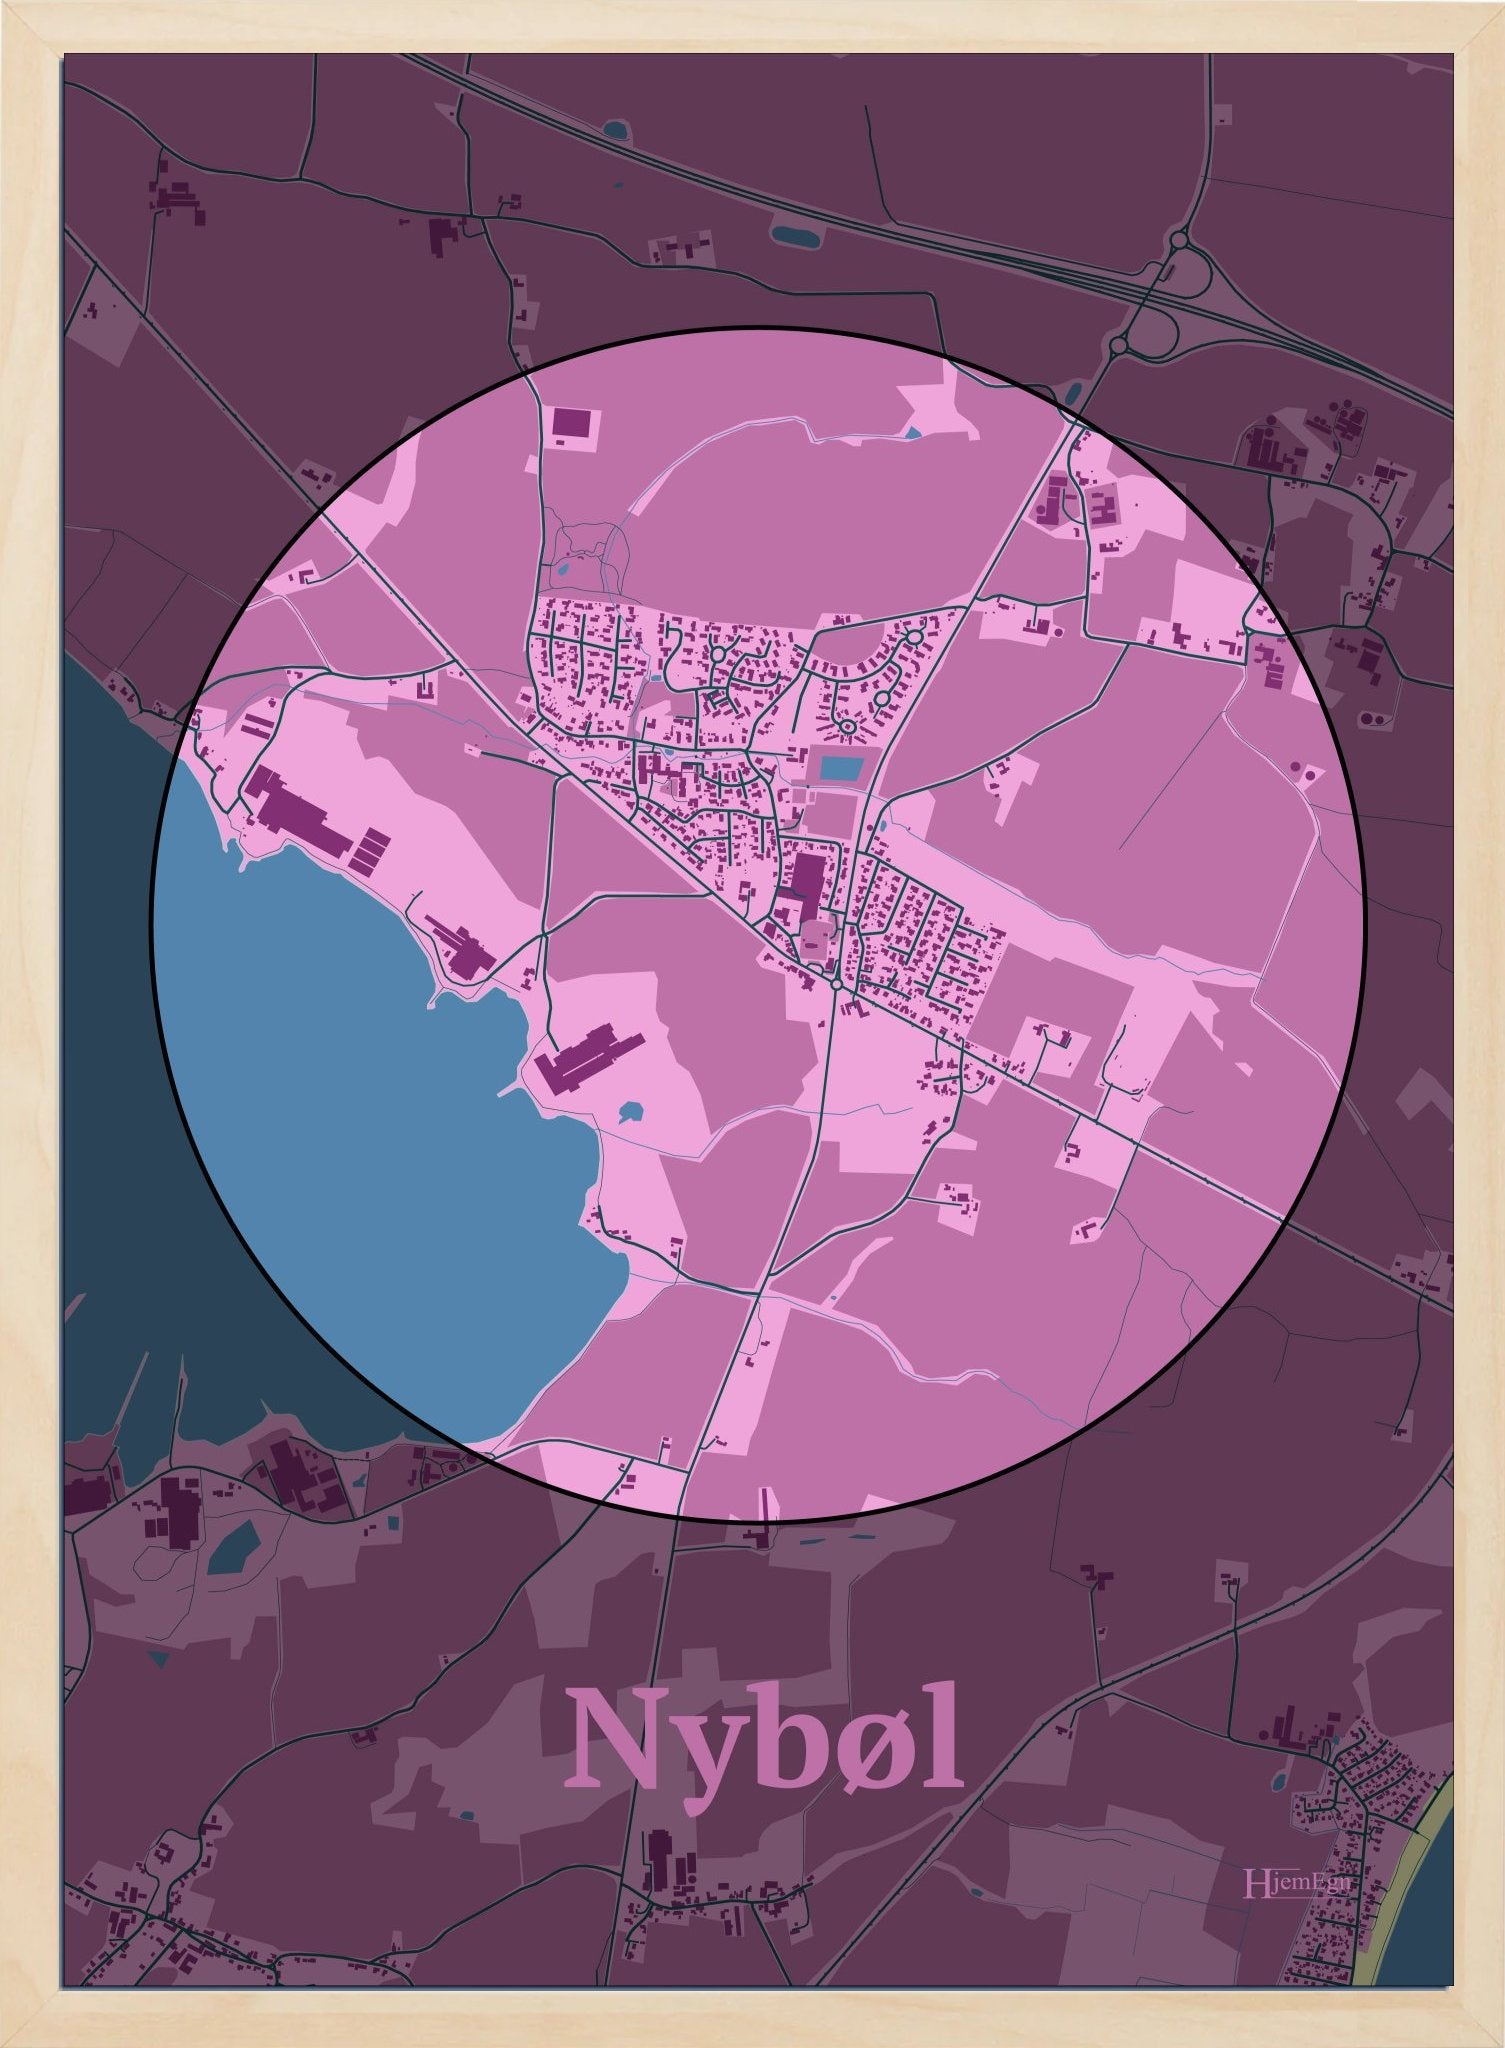 Nybøl plakat i farve pastel rød og HjemEgn.dk design centrum. Design bykort for Nybøl